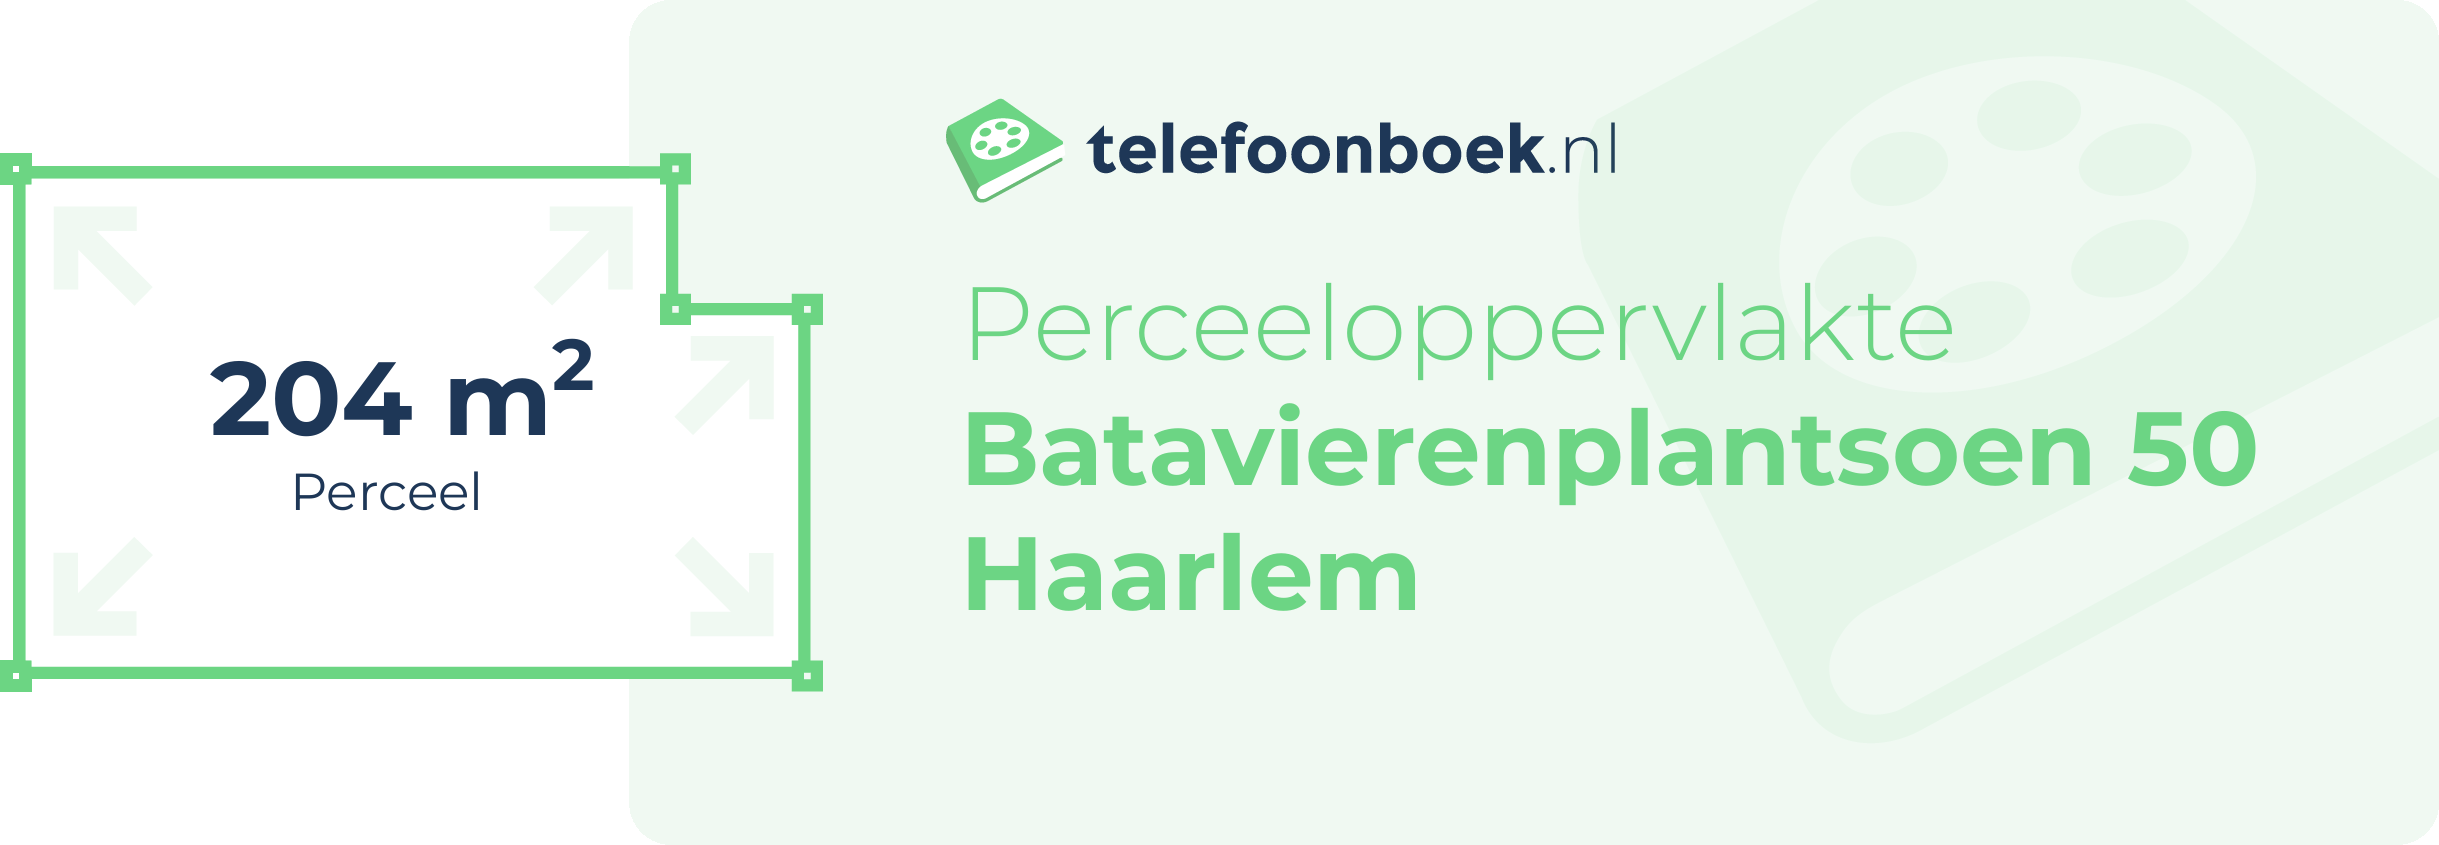 Perceeloppervlakte Batavierenplantsoen 50 Haarlem